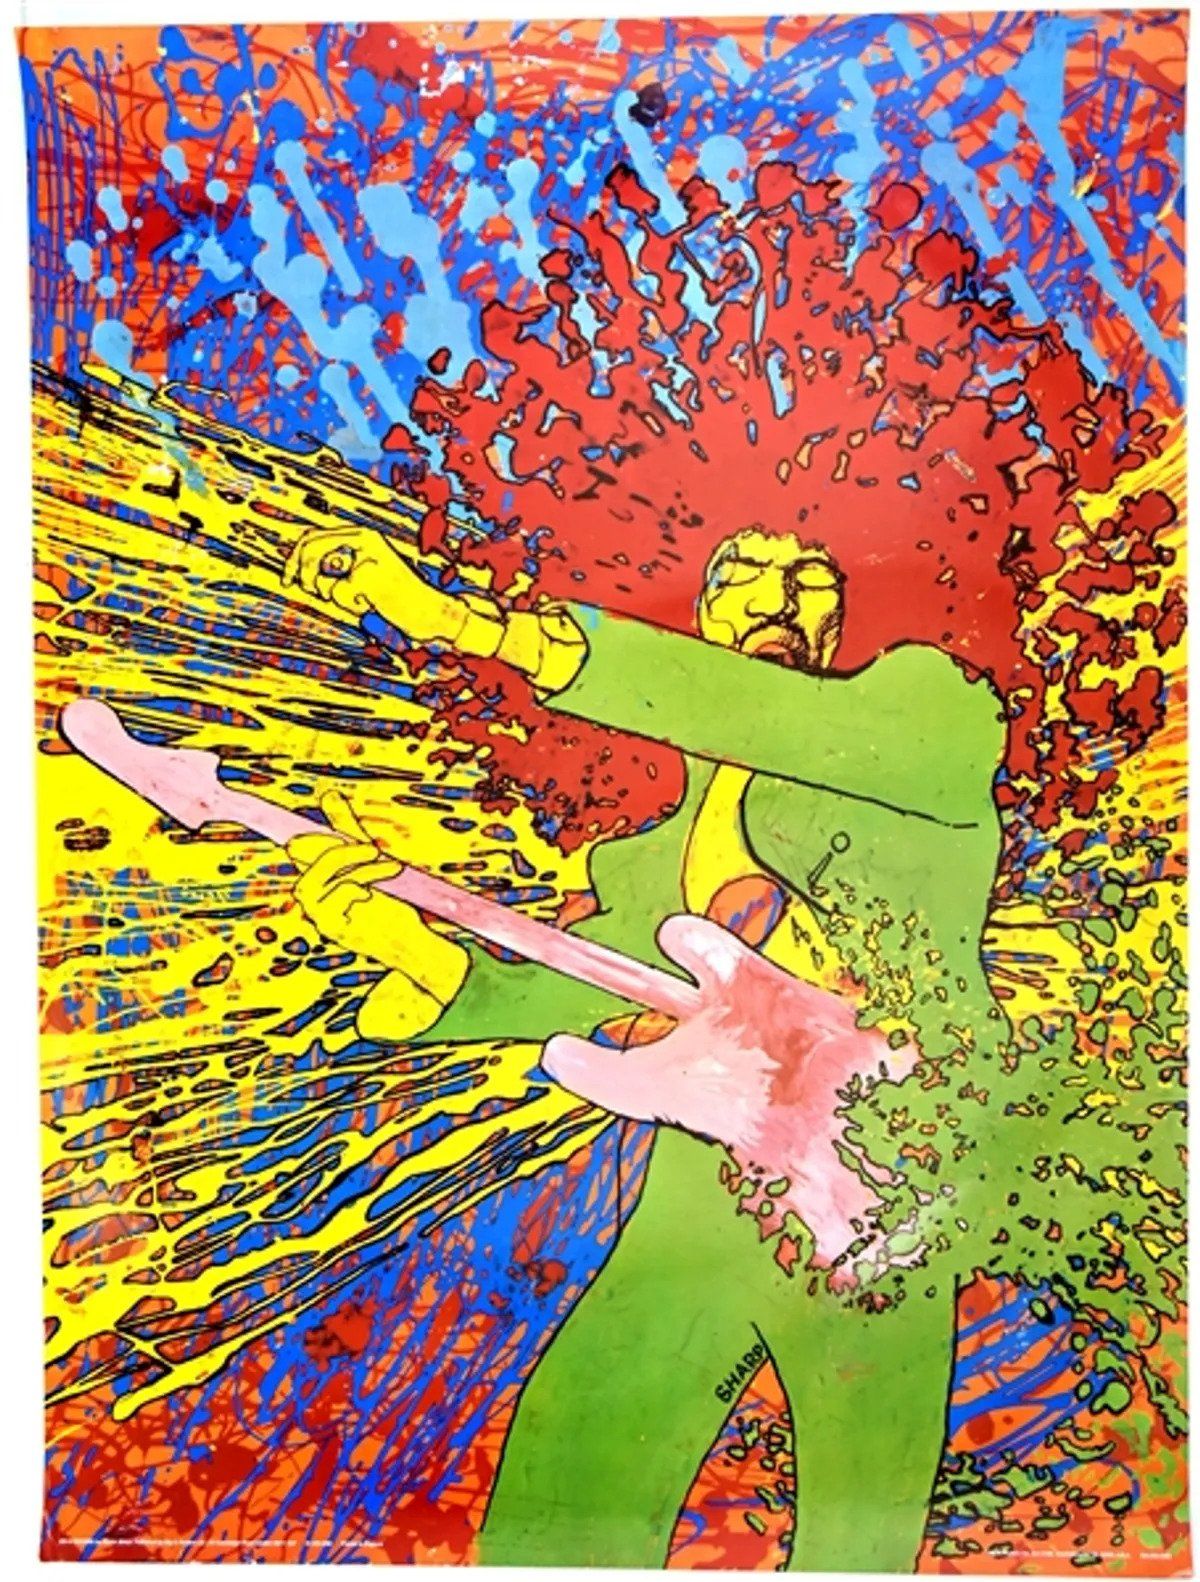 Jimi Hendrix "Explosion" Martin Sharp-Big-O 1968 Concert Poster